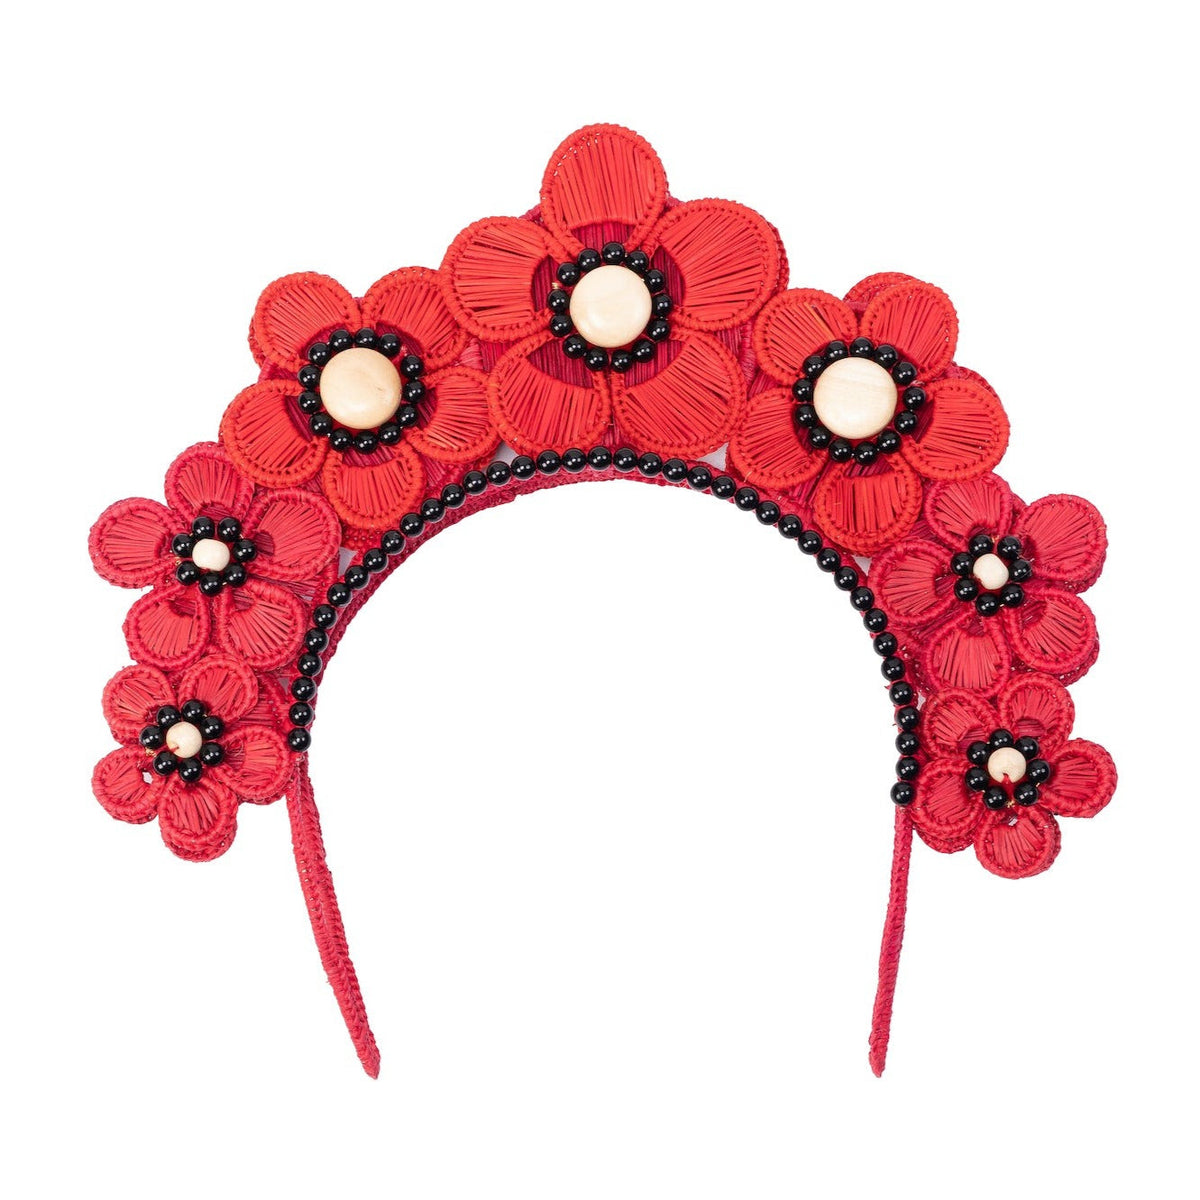 Flower Iraca Headpiece in Red